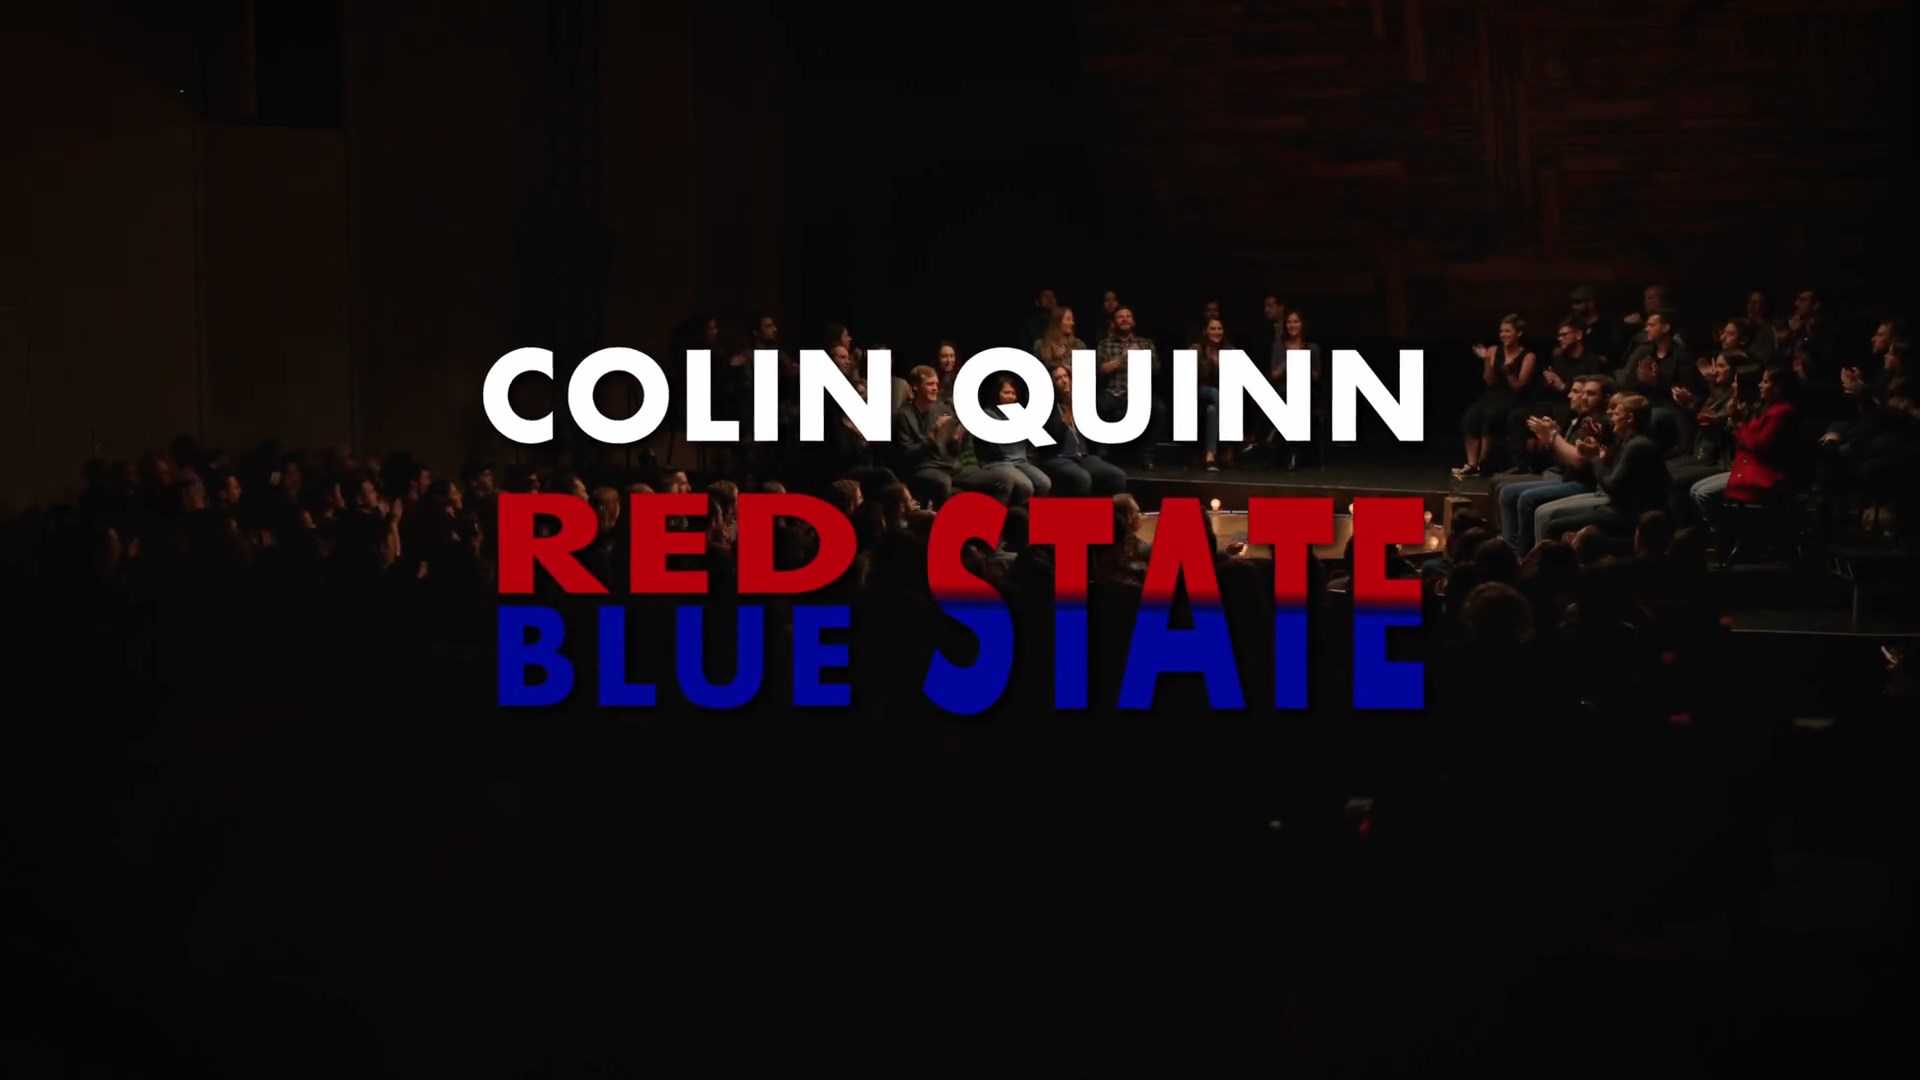 Colin Quinn: Red State Blue State,Colin Quinn: Red State Blue State 2019,Colin Quinn: Red State Blue State مترجم,Colin Quinn,ستاند اب كوميدي,ستاند اب,كولين كوين: دولة يمين ويسار,كولين كوين